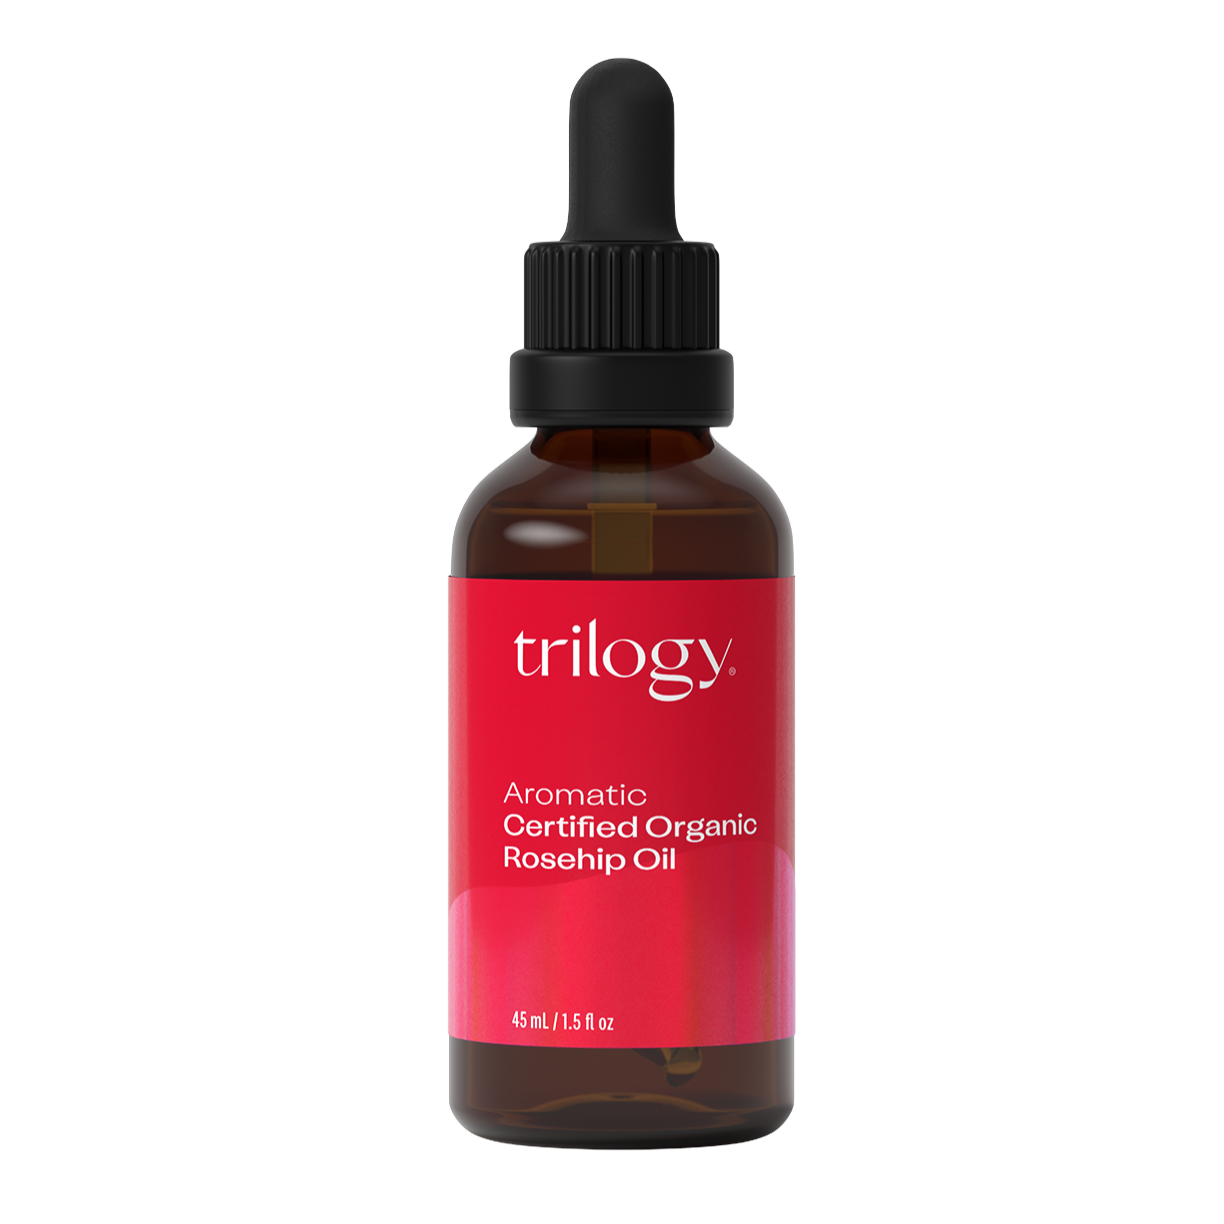 TRILOGY Aromatic Certified Organic Rosehip Oil (45ml)